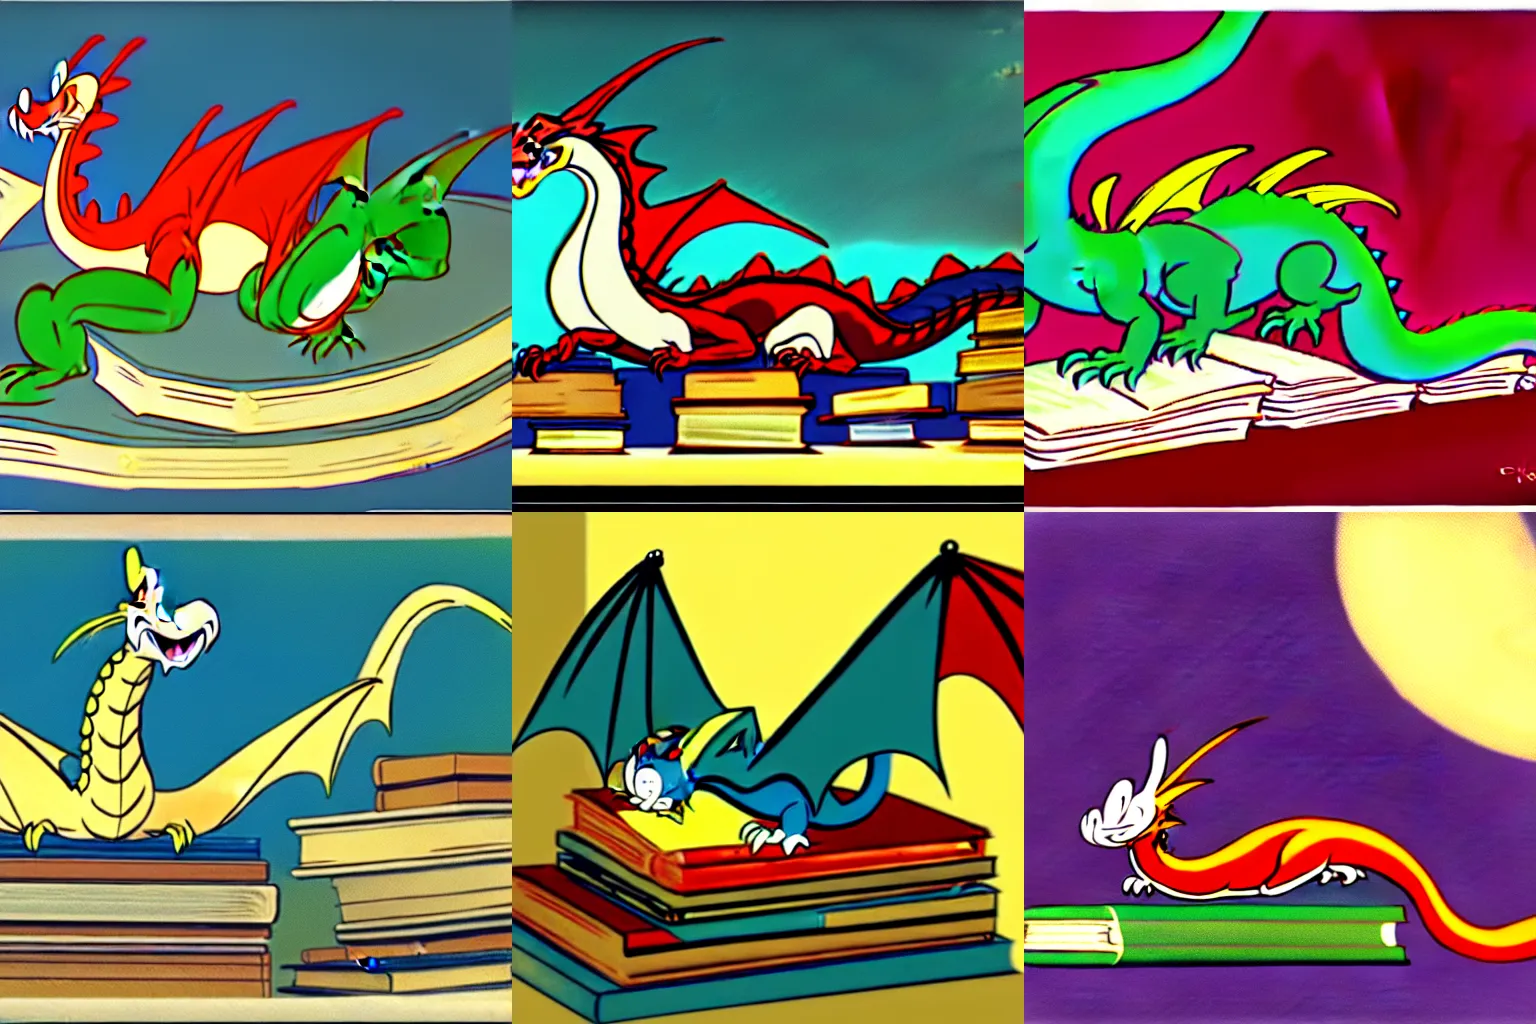 Prompt: huge Dragon sleeping on a large hoard of books, by Chuck Jones, animation keyframe, looney tunes, technicolor, cartoon